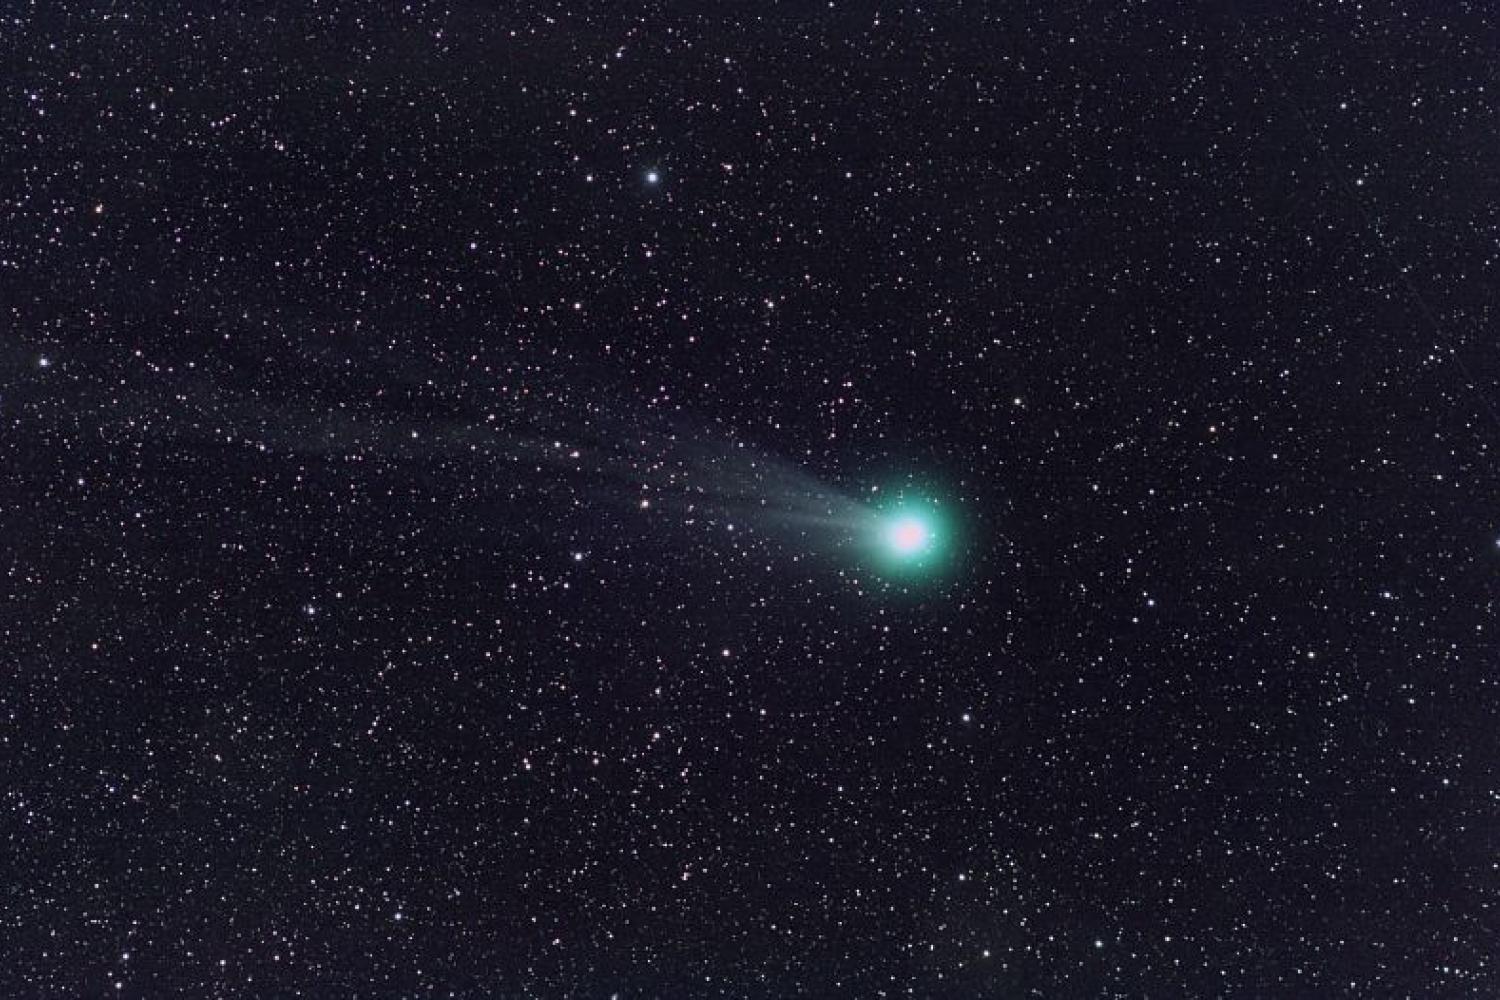 comete_lovejoy_observee_le_13_janvier_2015_c_bruno_daversin_pnc.jpg